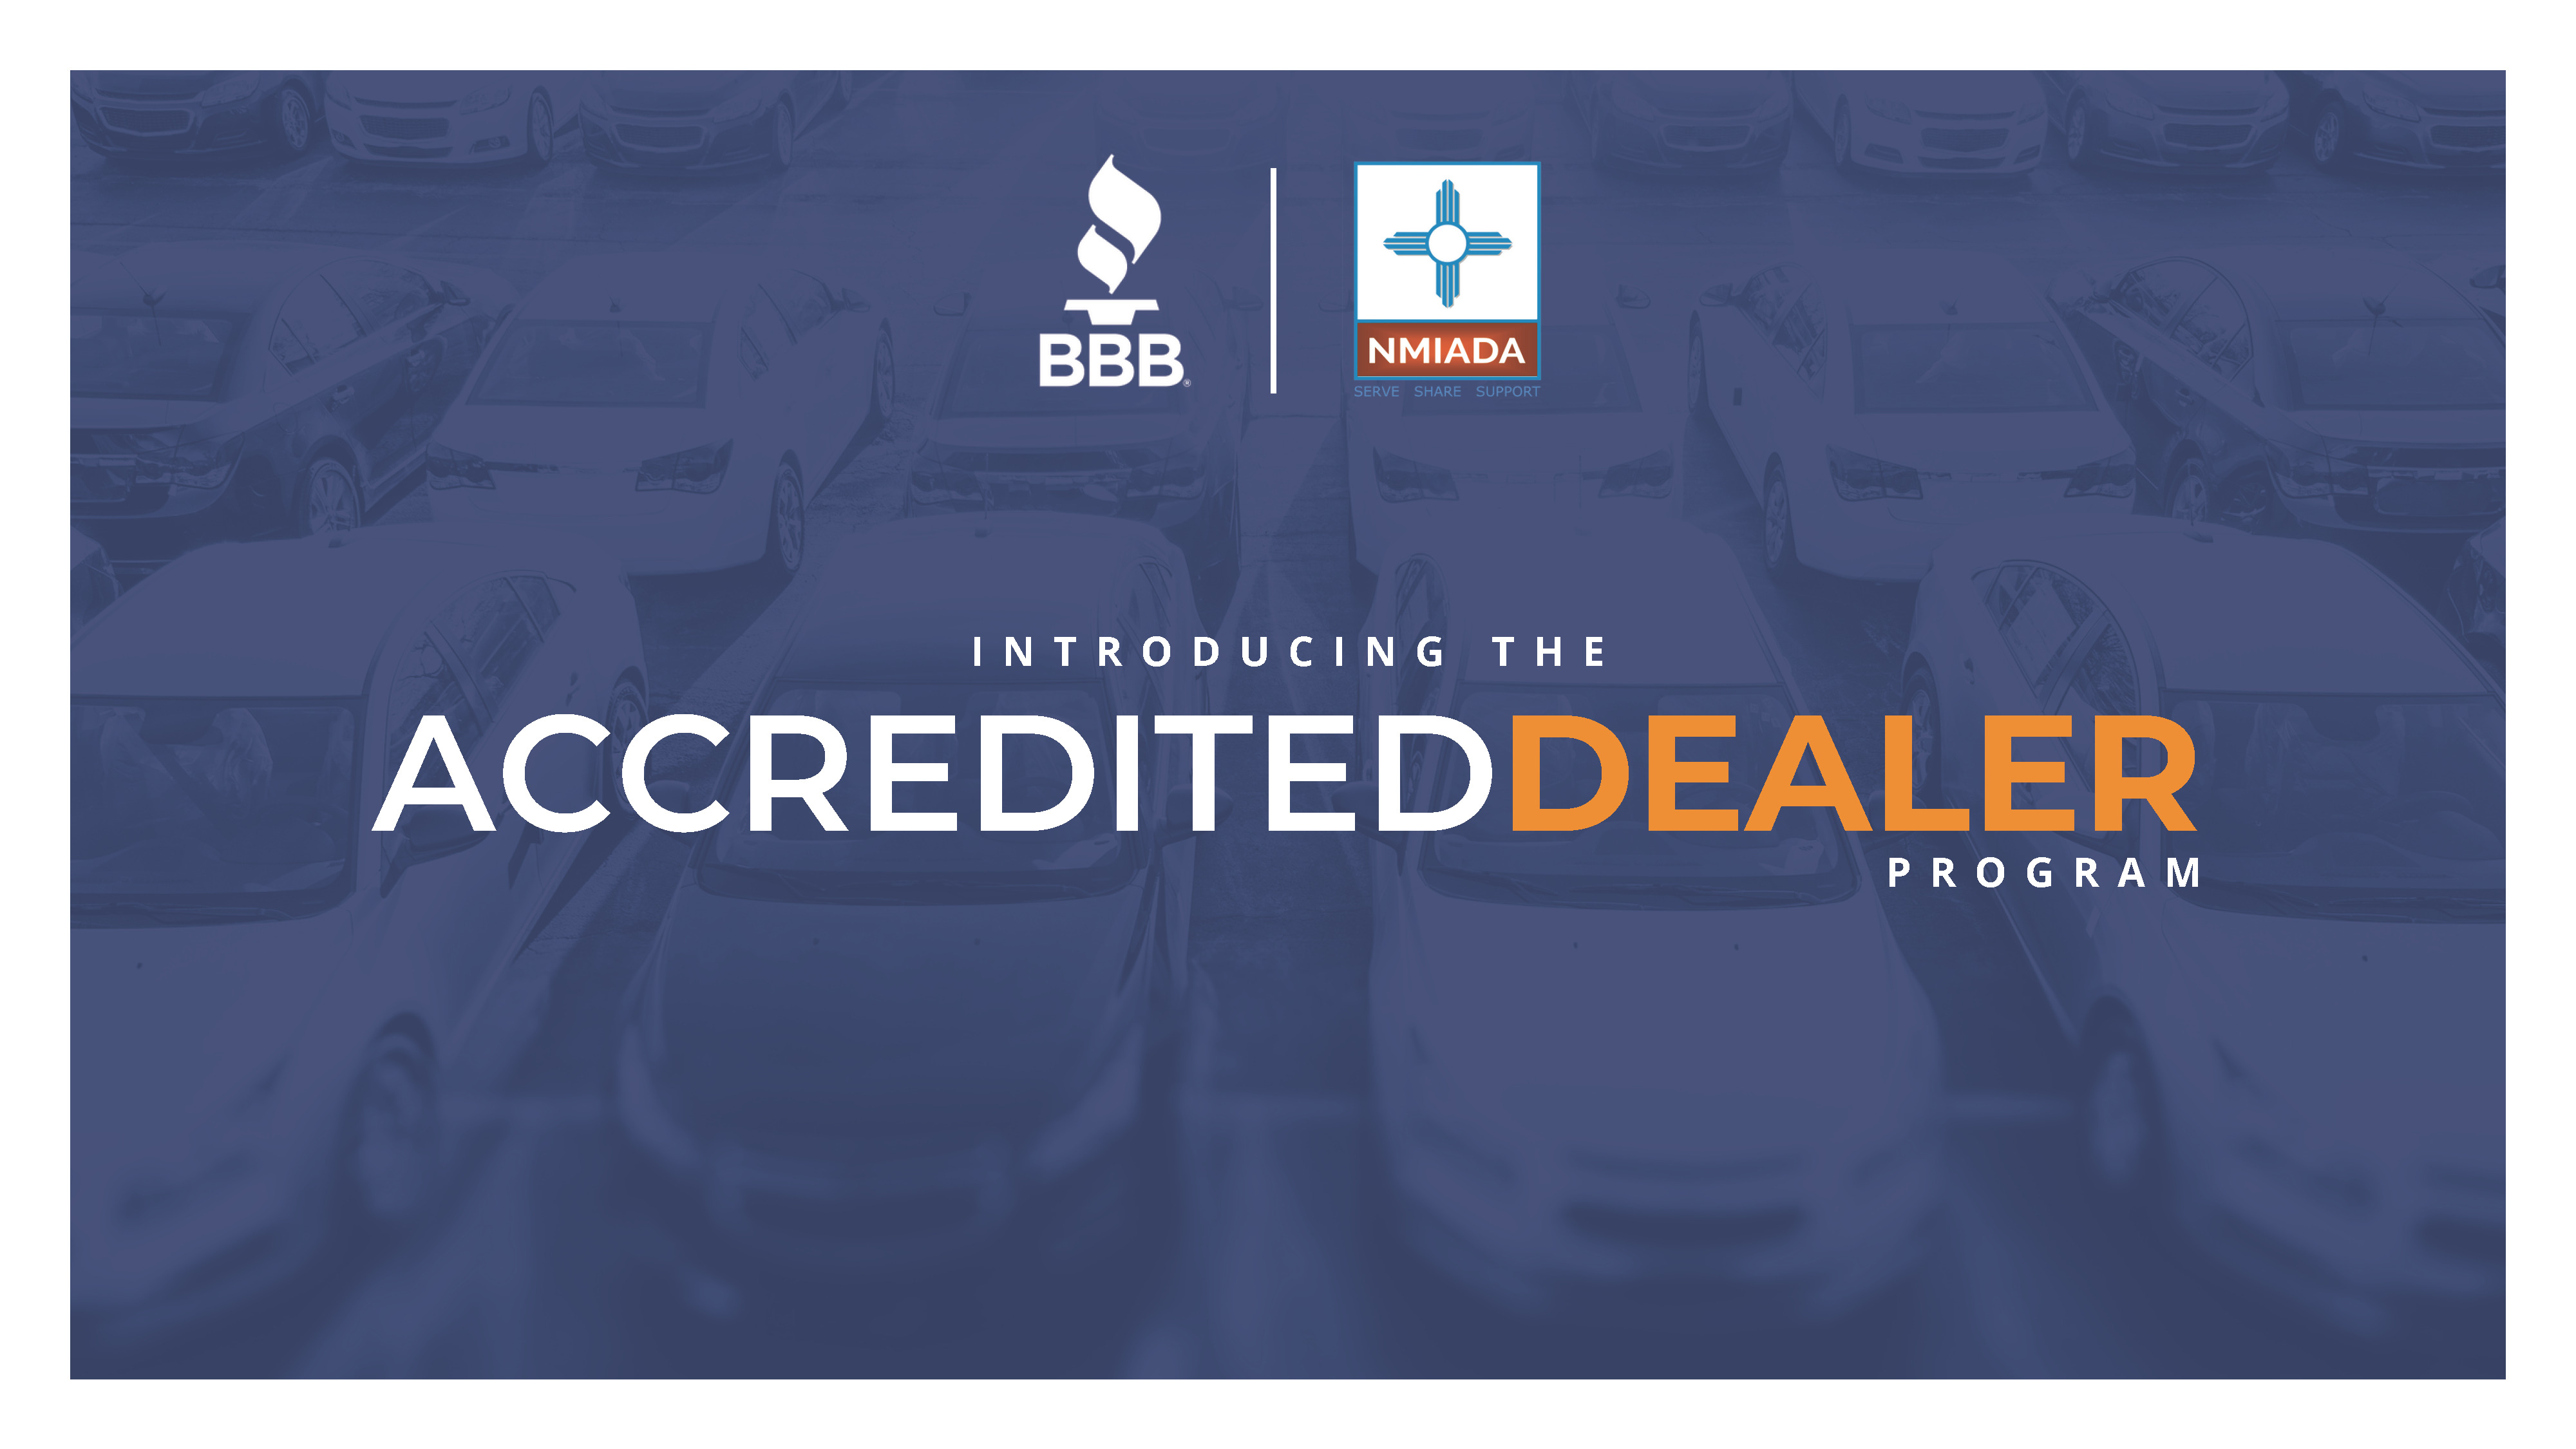 BBB NMIADA Accredited Dealer Program Slide Deck FINAL_Page_01